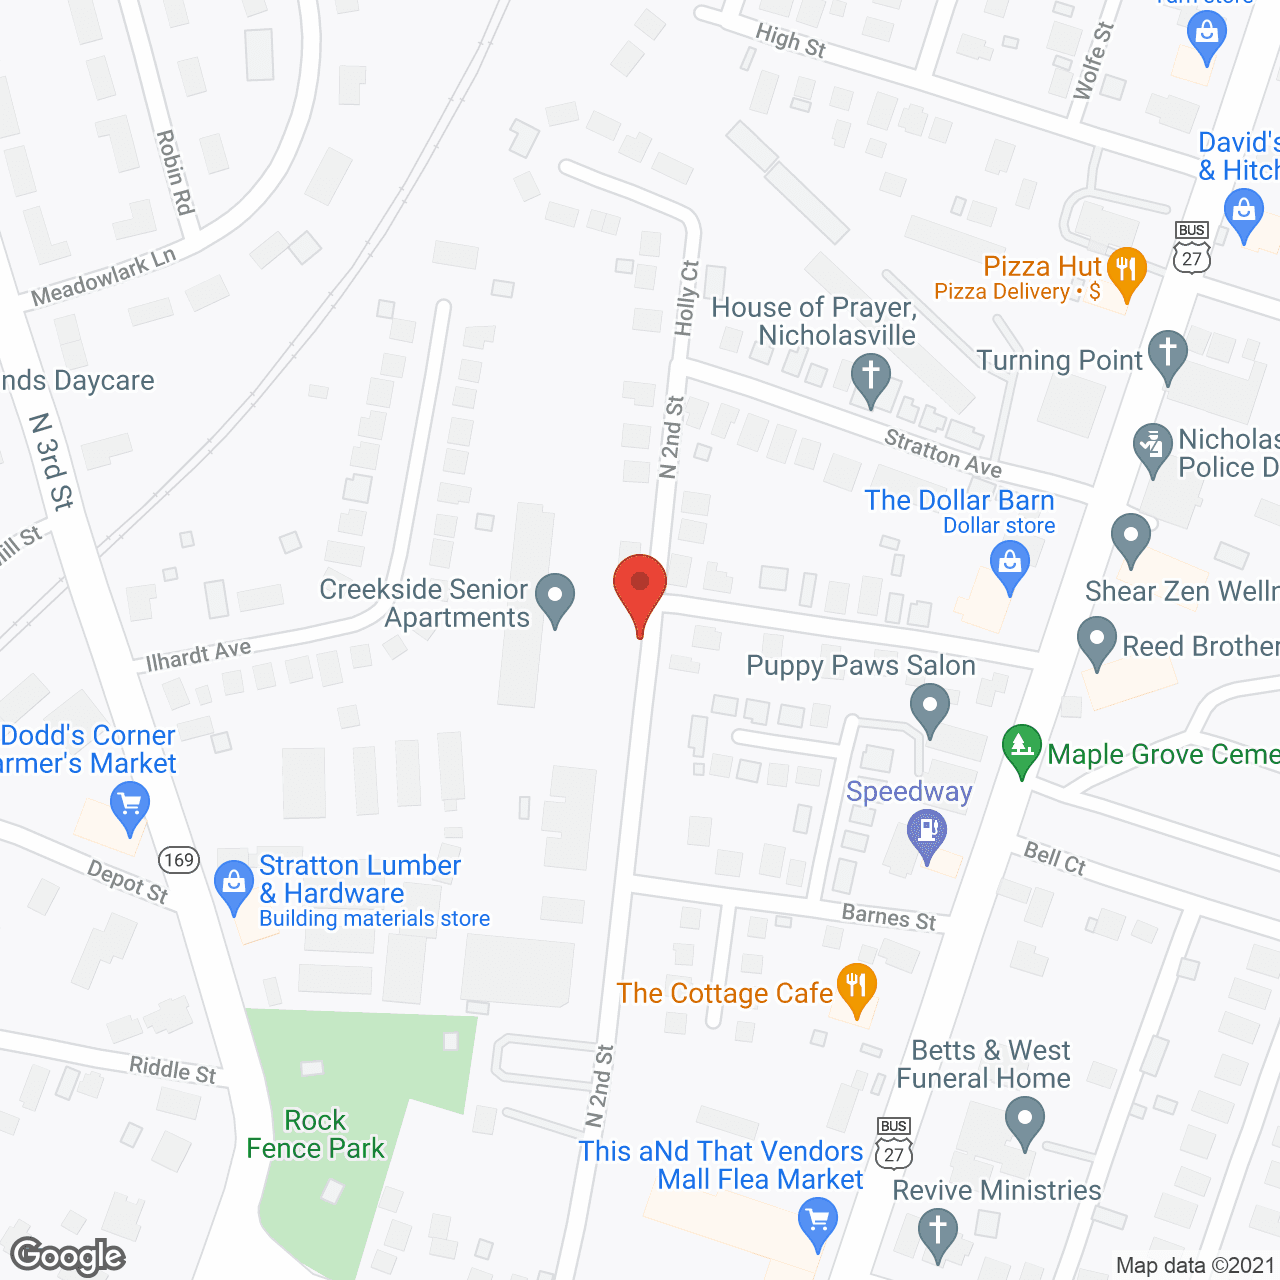 Creekside Senior Apartments in google map